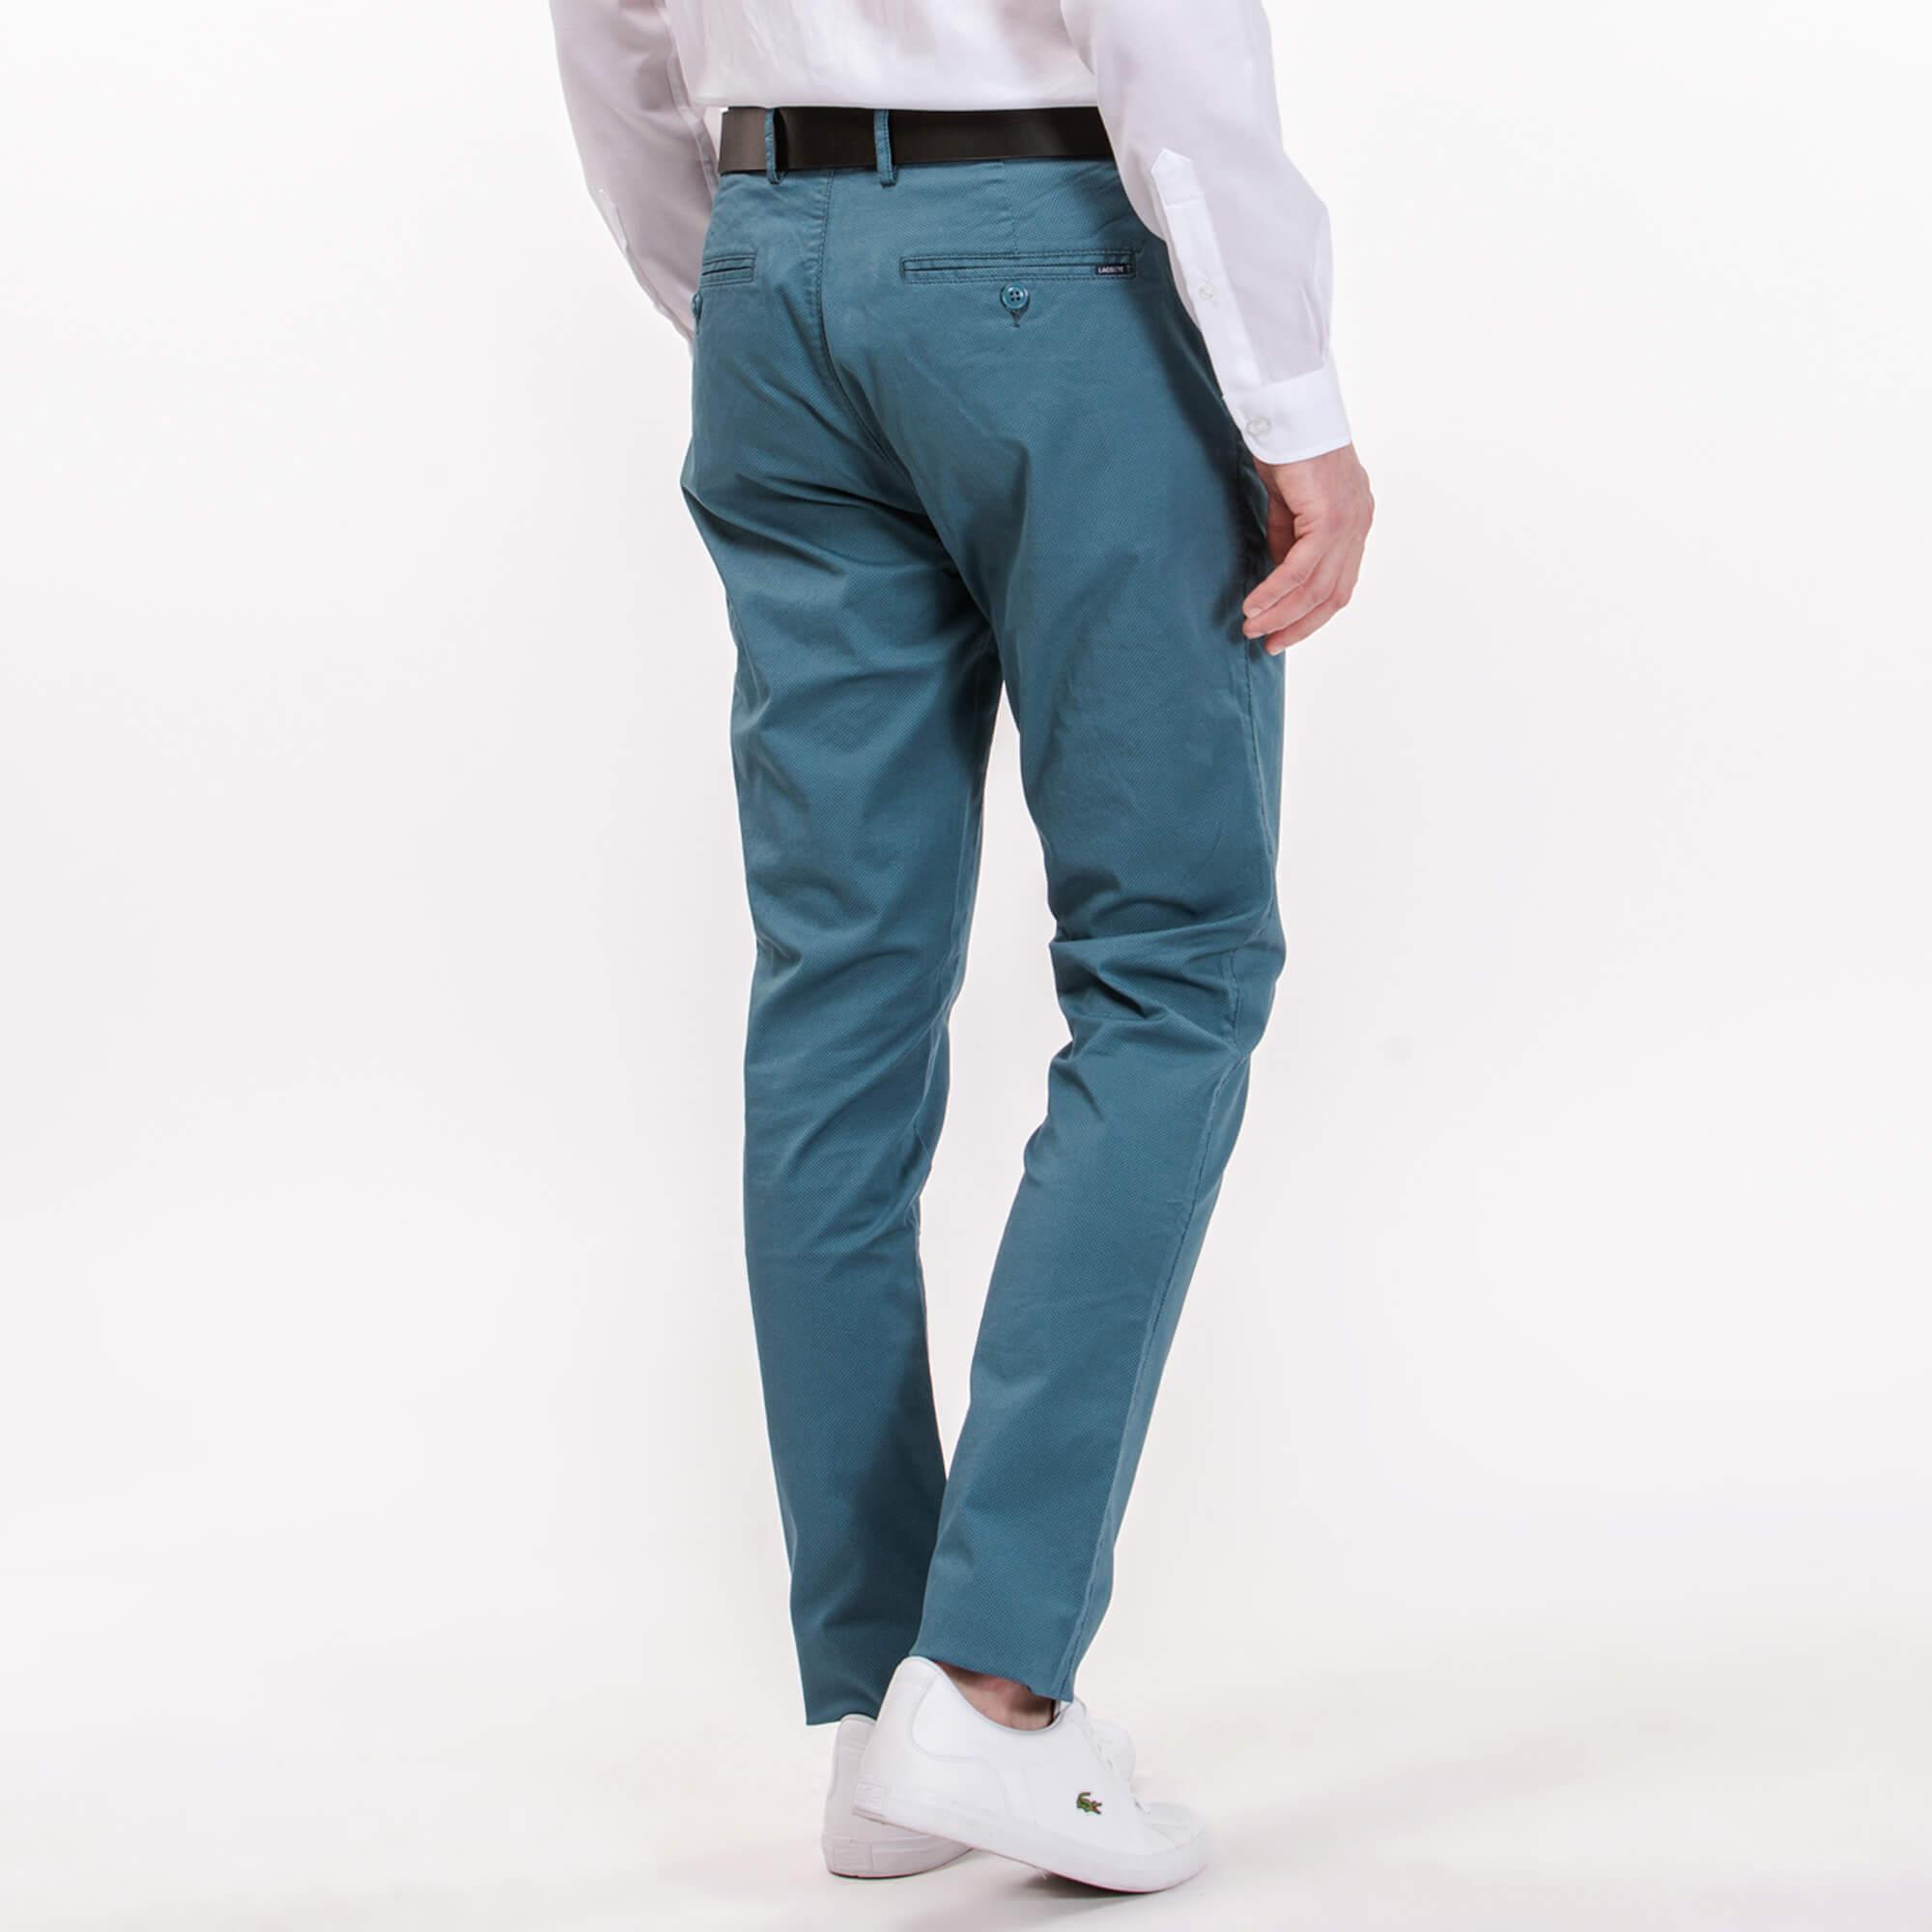 lacoste trousers online